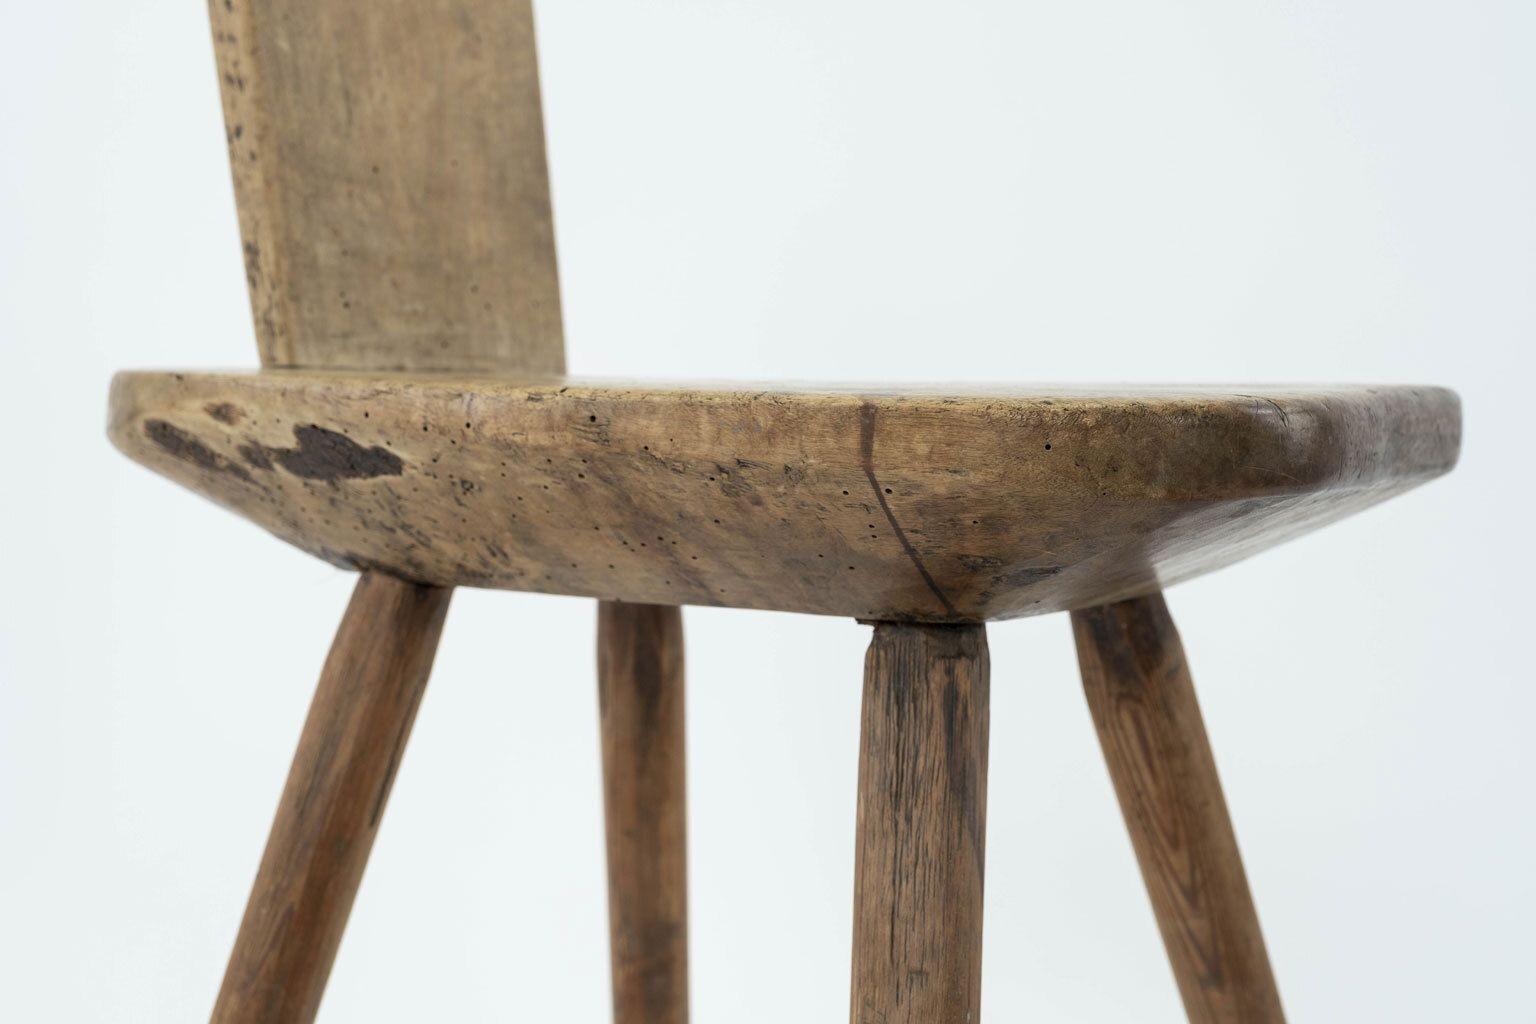 Primitive Charming Swedish Rustic Chair